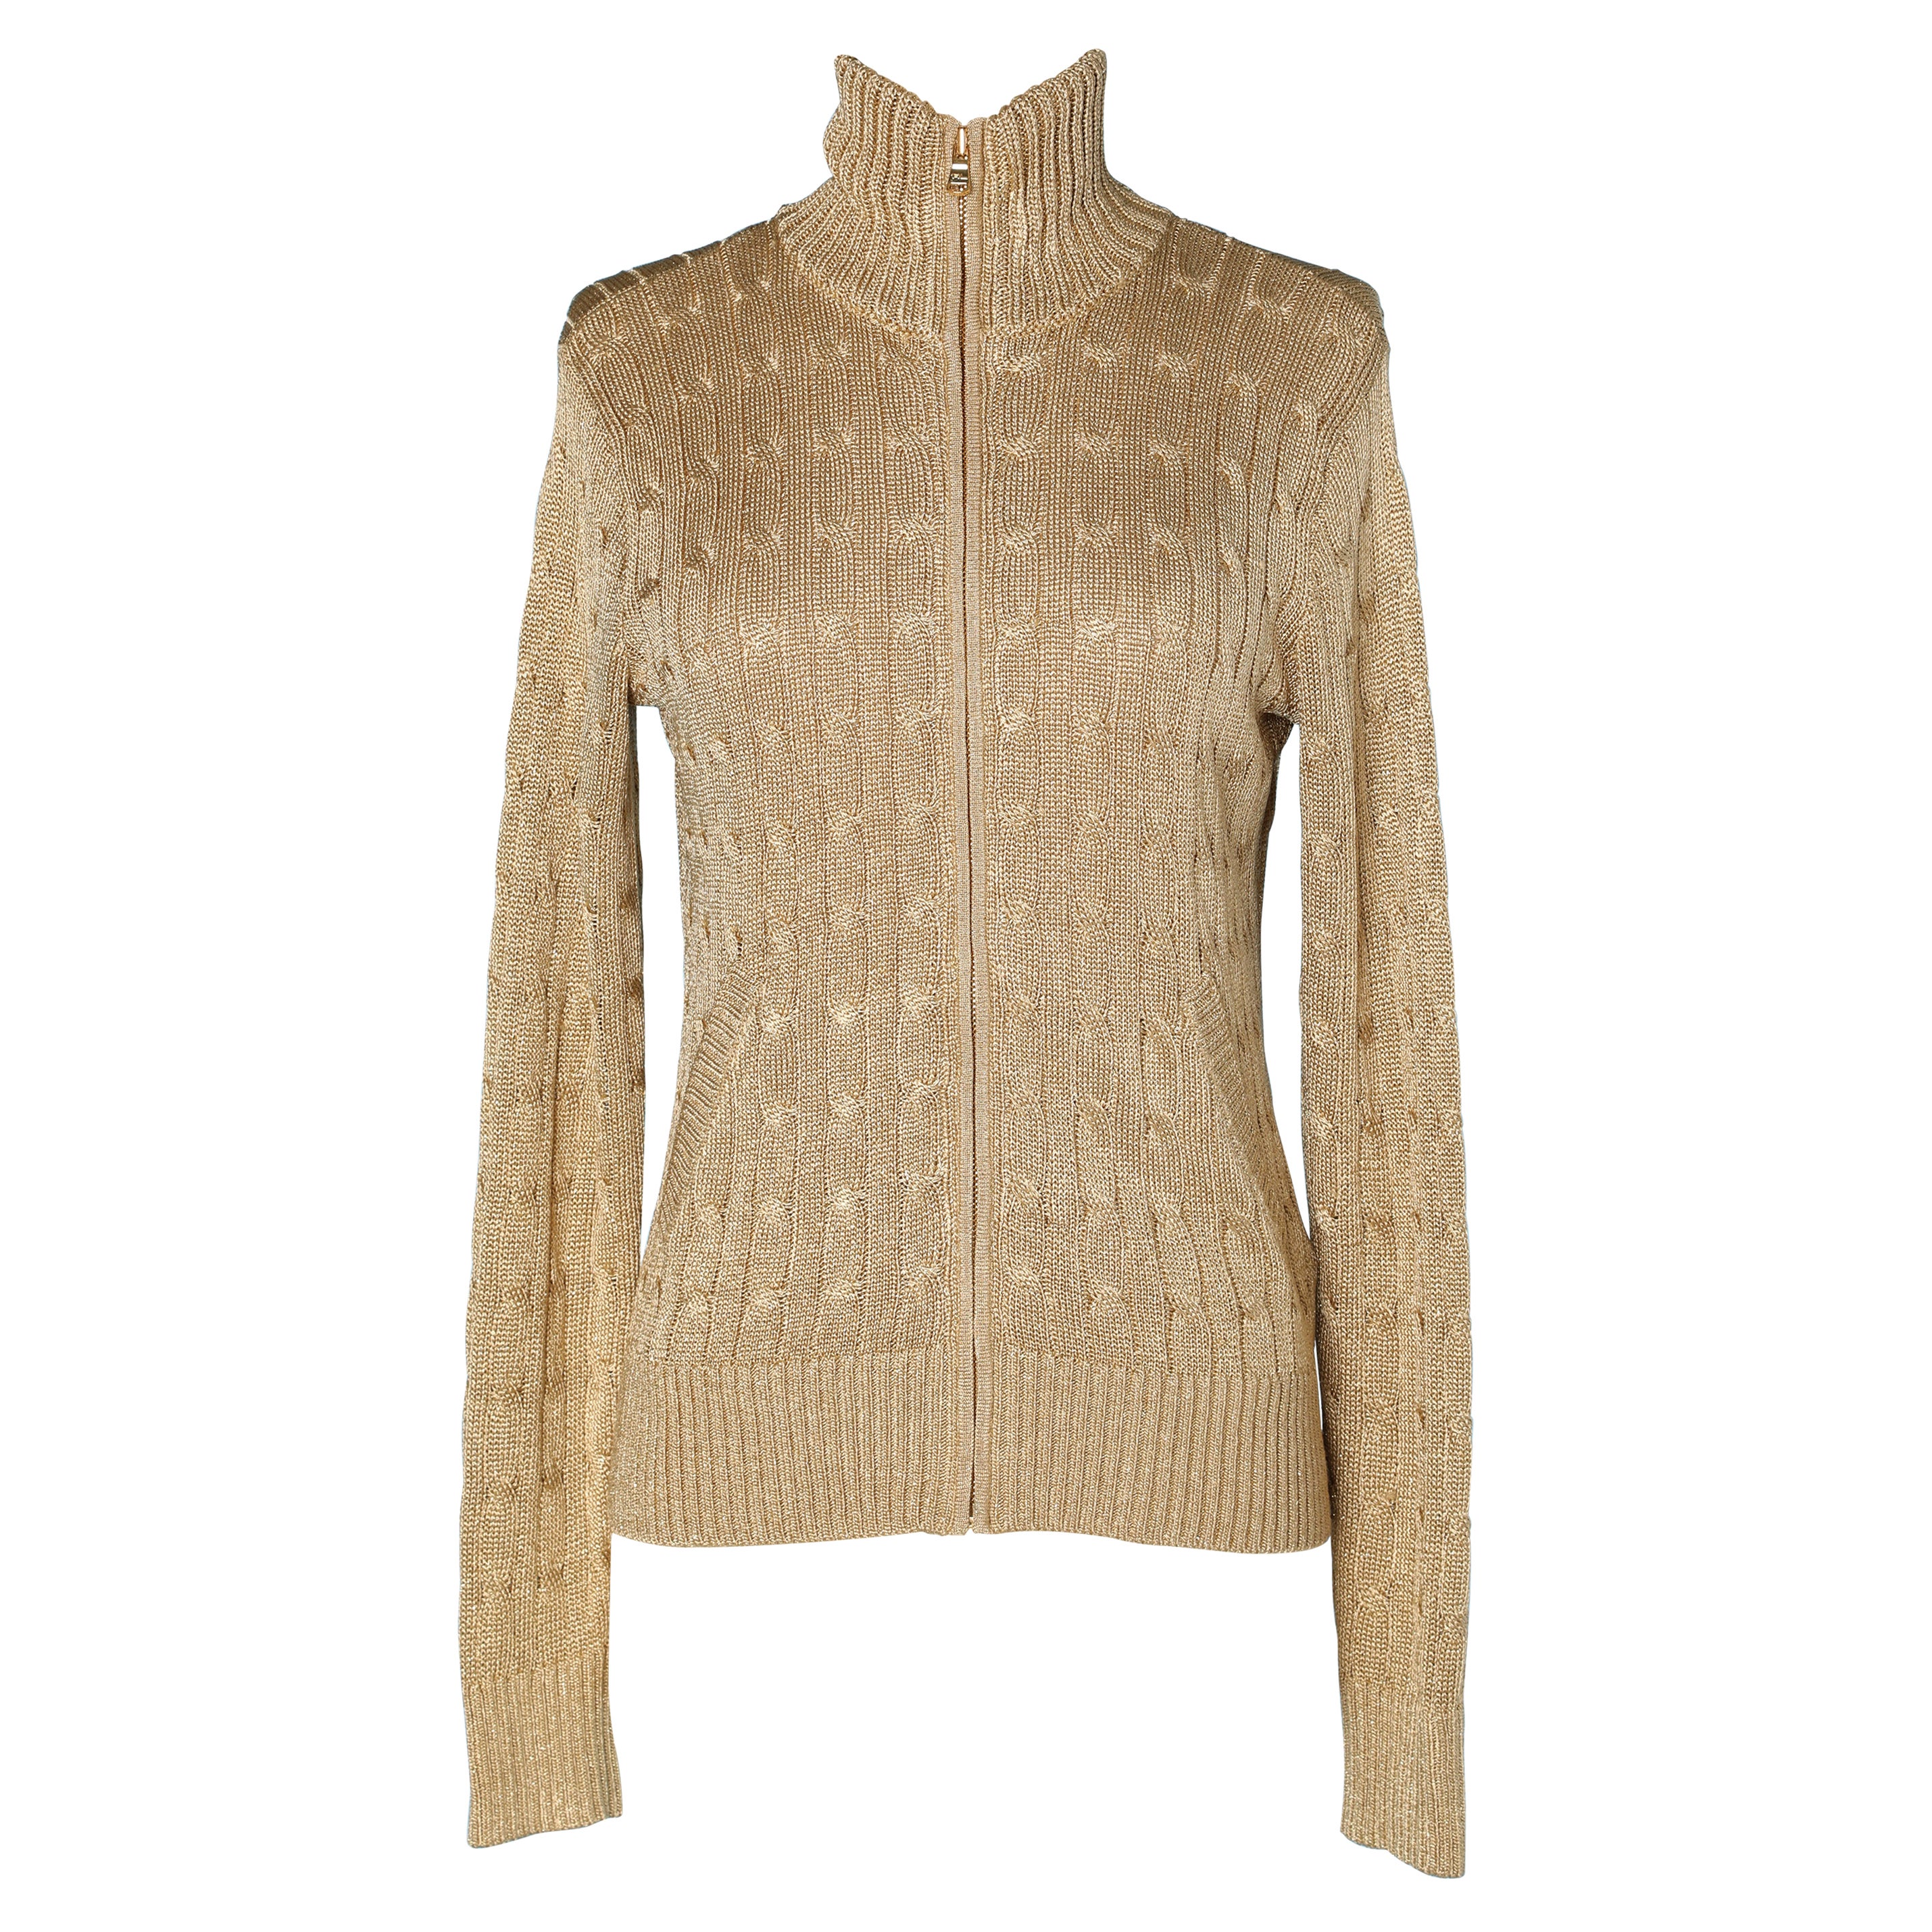 Ralph Lauren Gold Sweater - 2 For Sale on 1stDibs